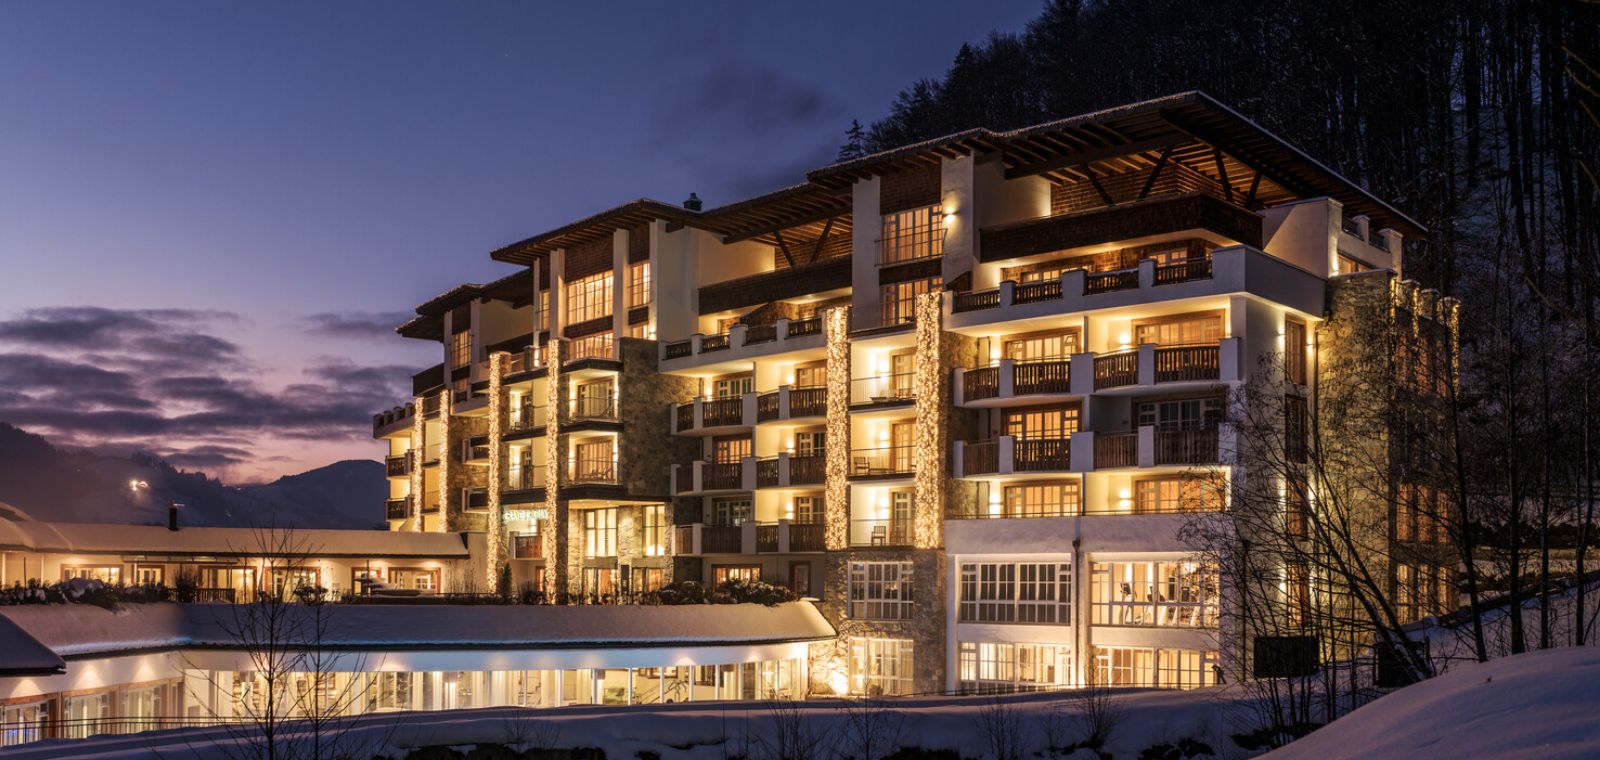 The Luxury Hotel in snowy Kitzbühel